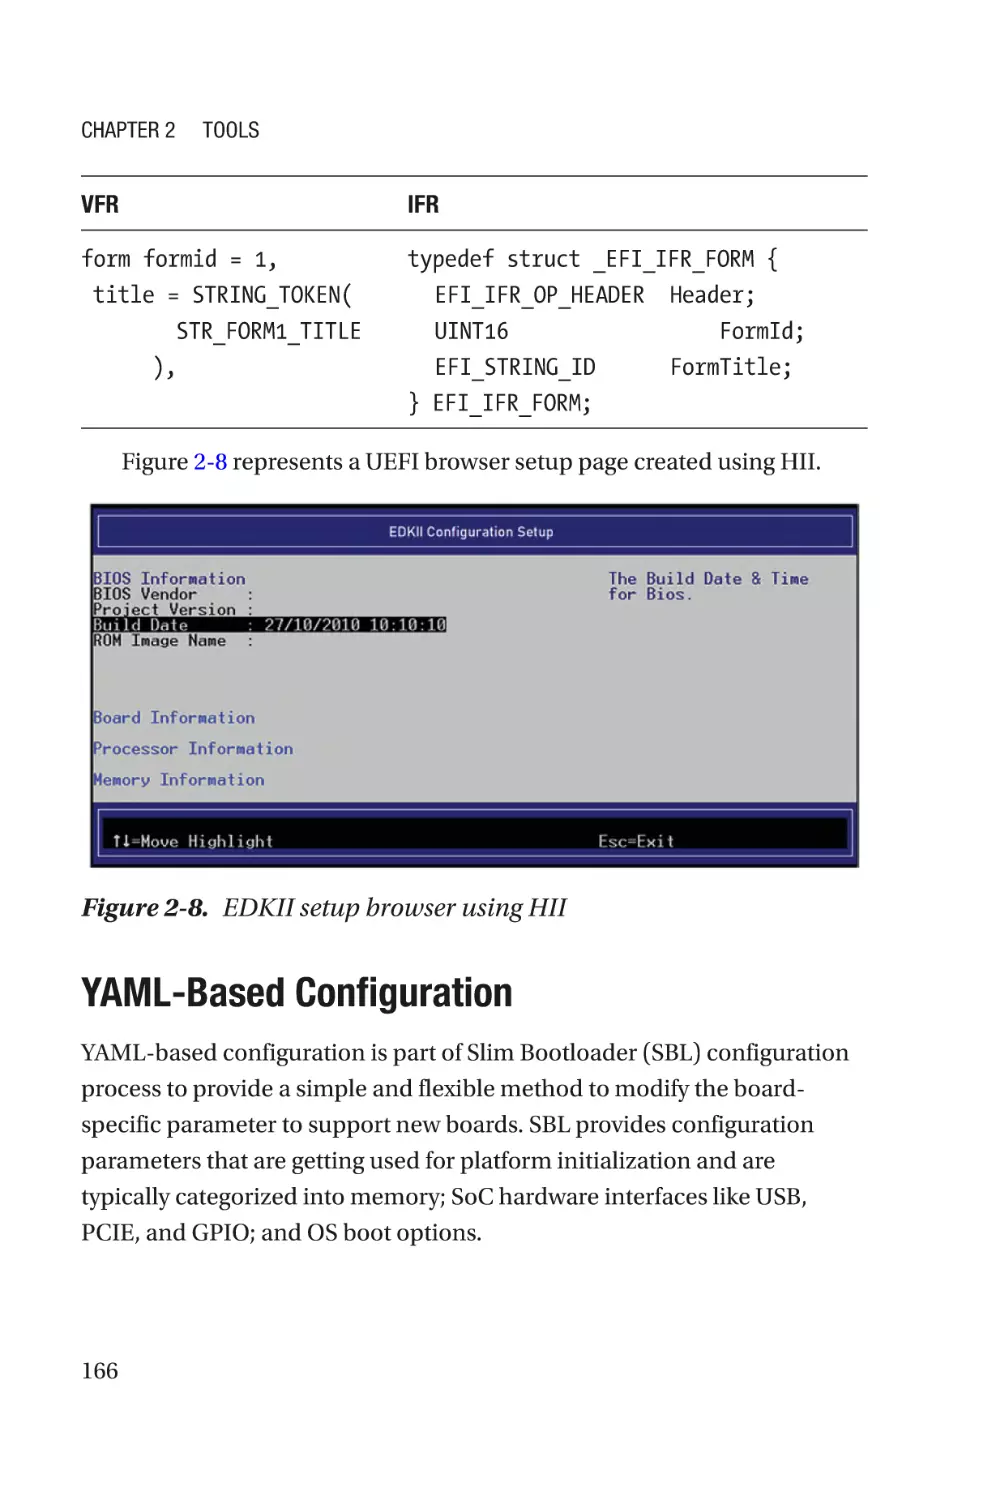 YAML-Based Configuration